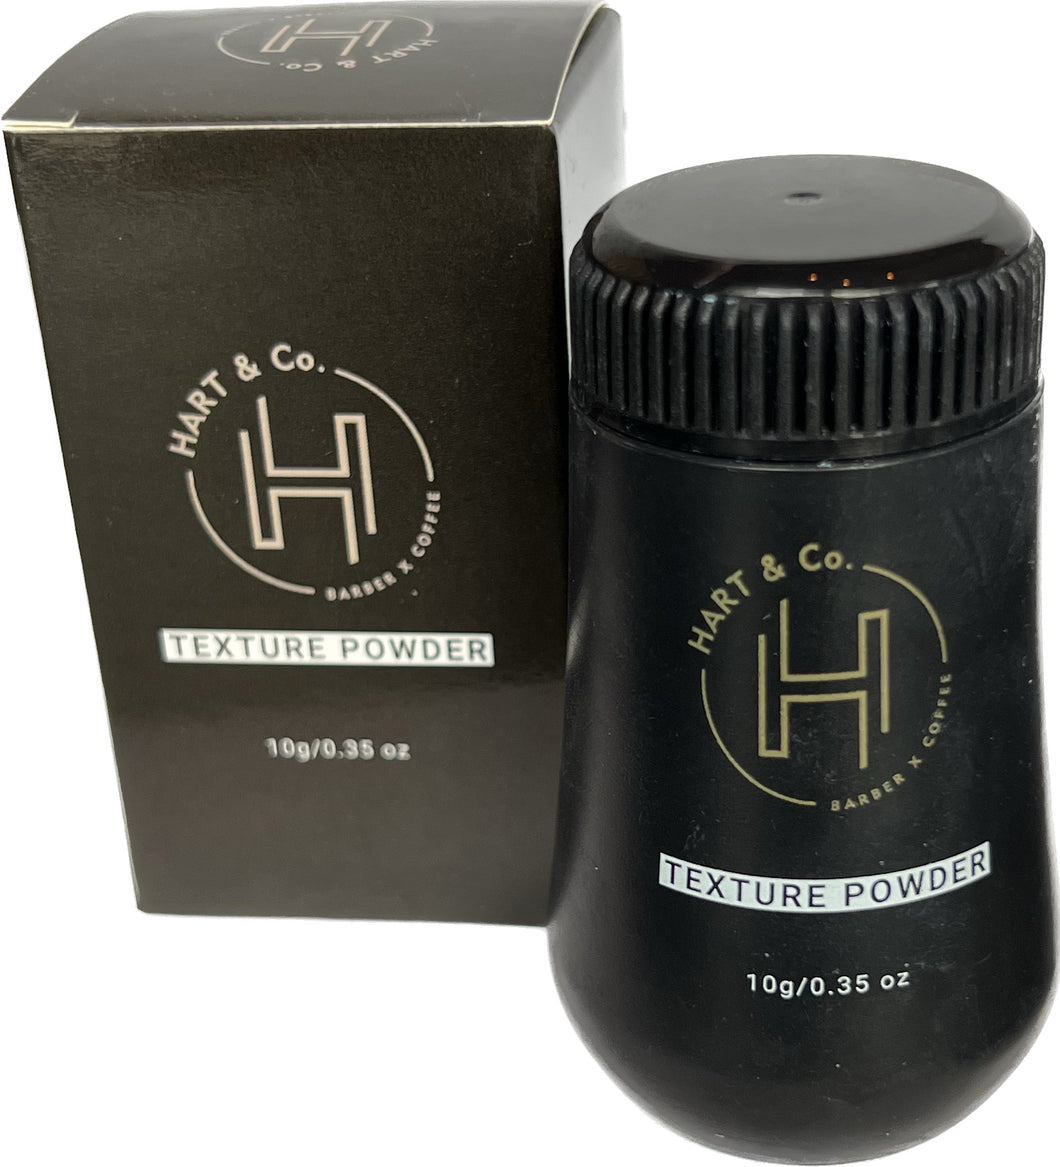 Hart & Co. Texture Powder